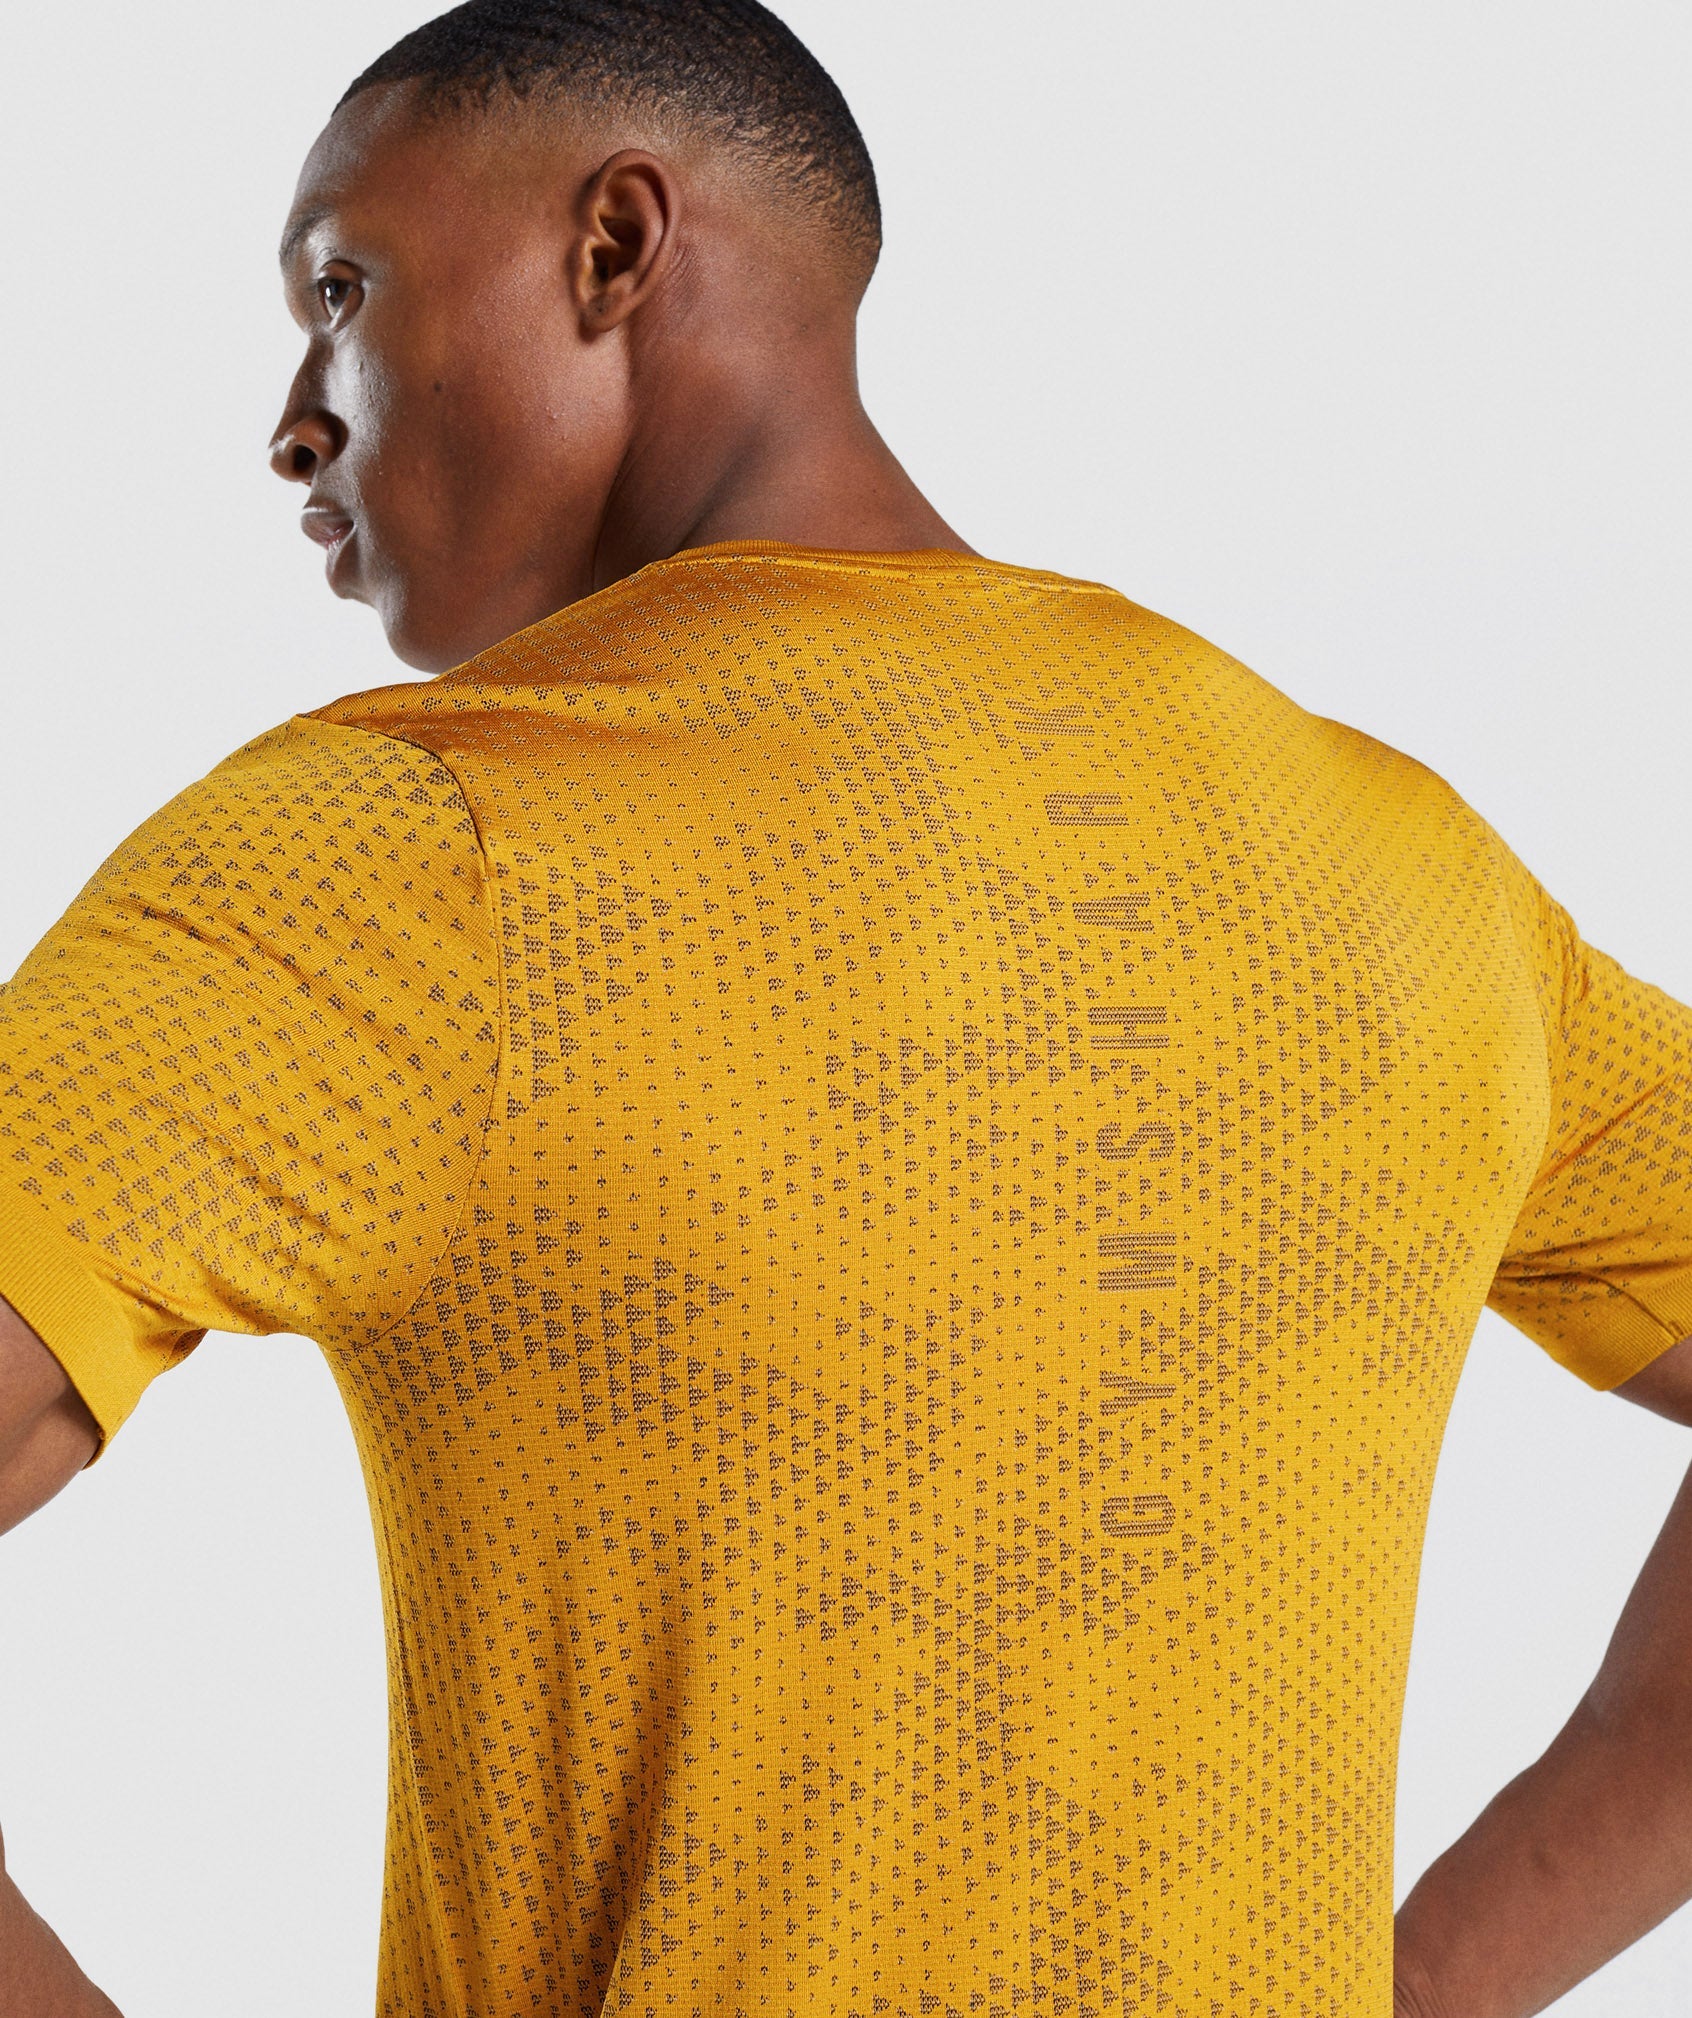 Endurance Collection Seamless T-Shirt mauve – Fitico Sportswear